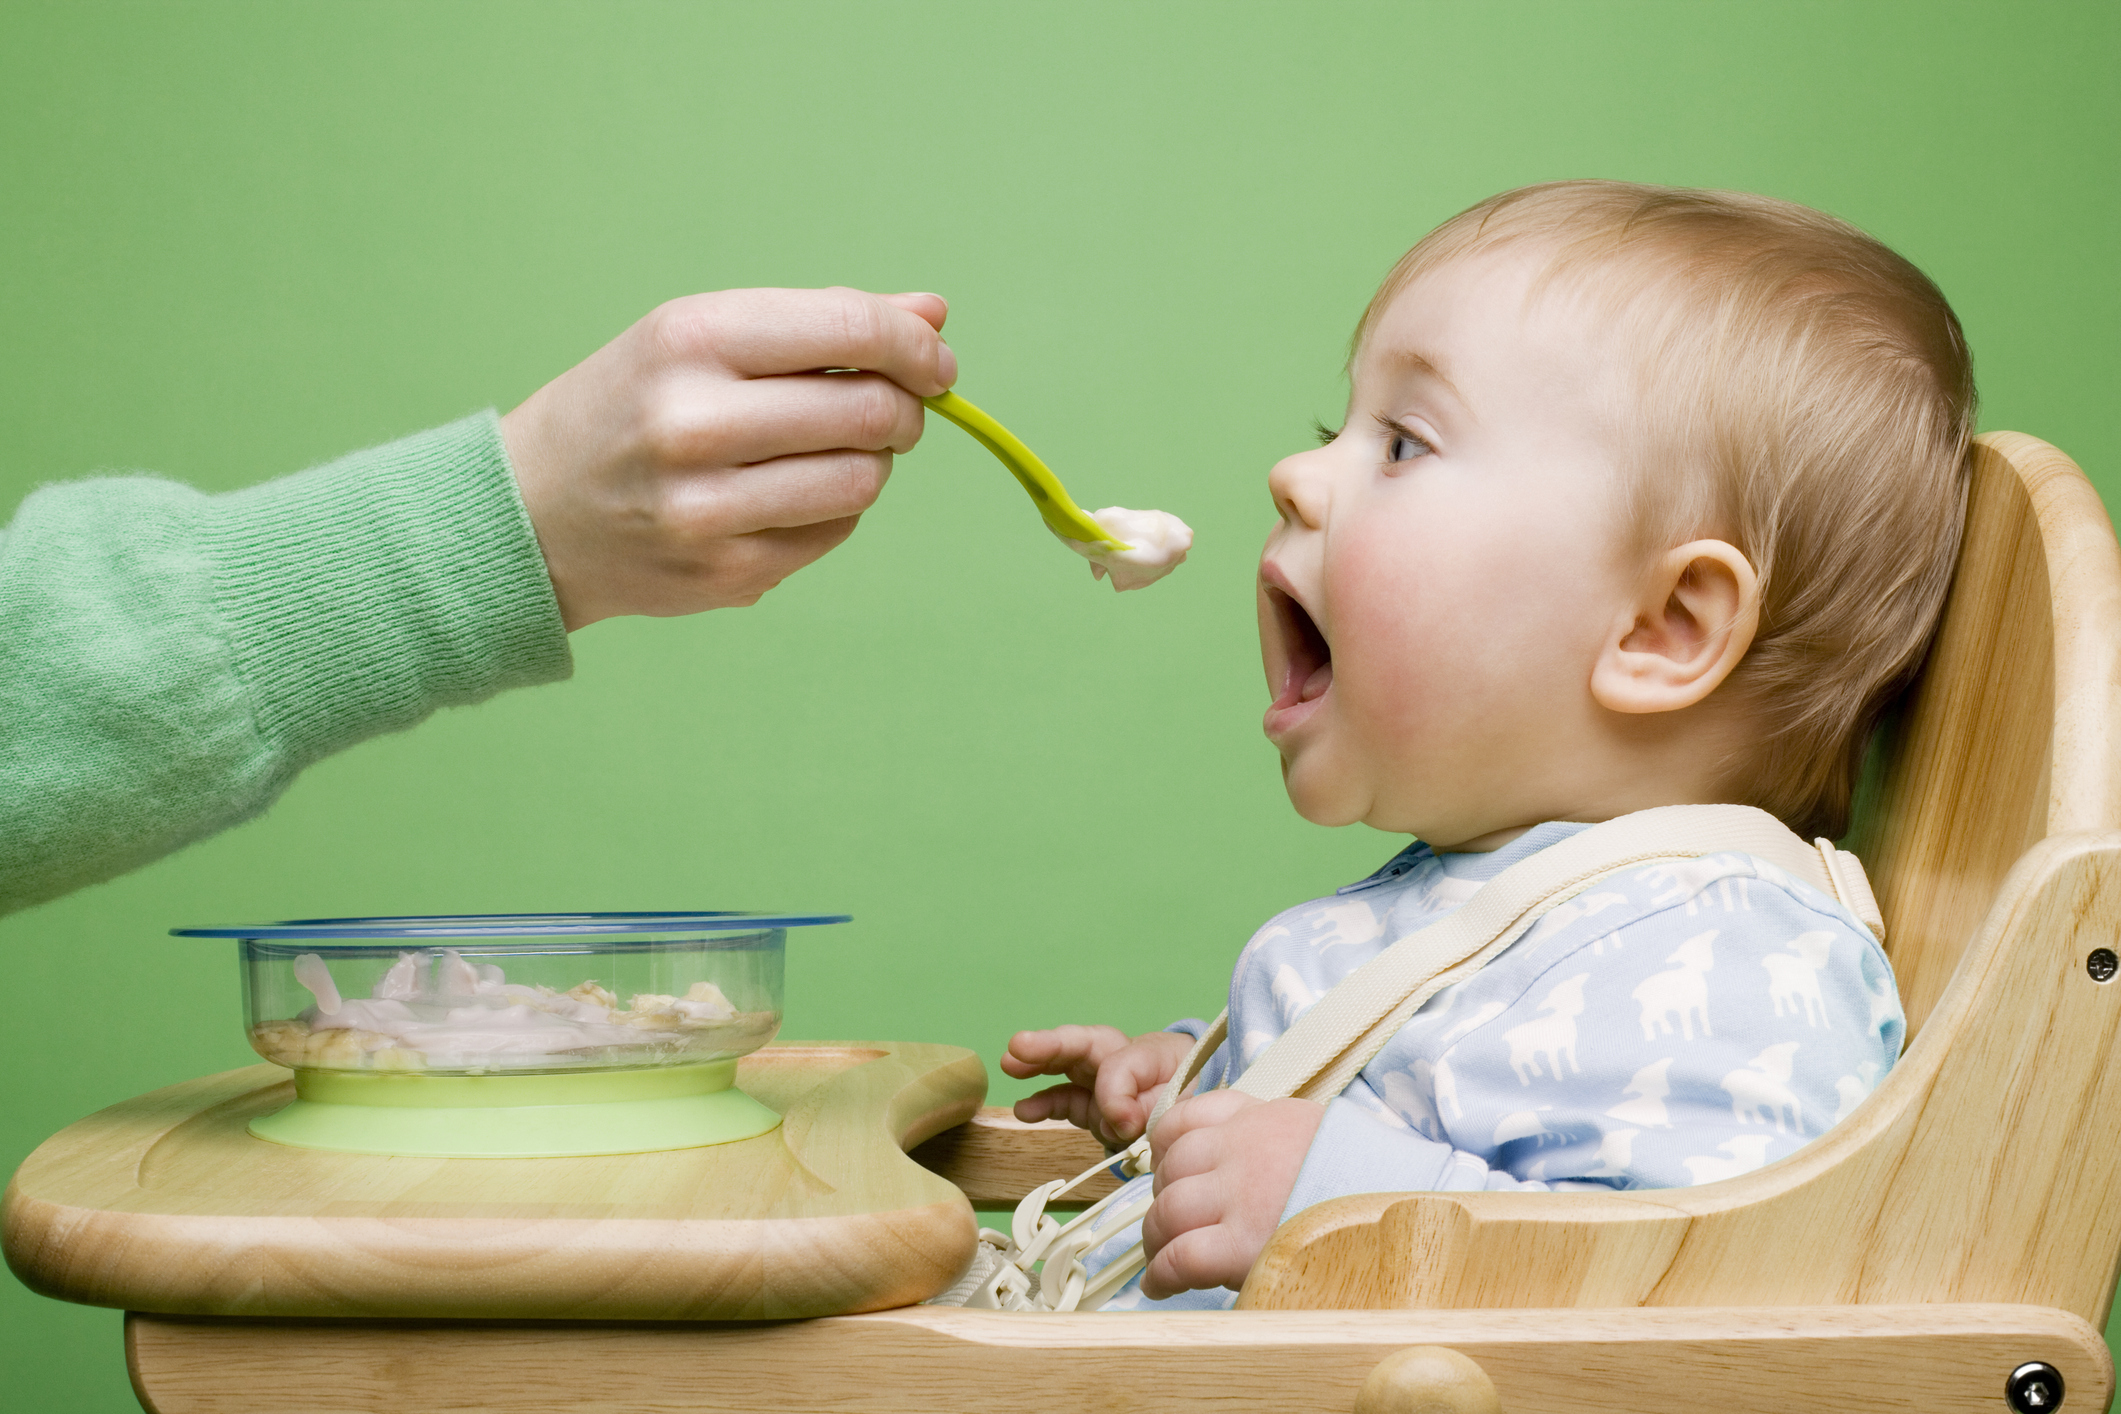 Feeding Therapy - Baby Eating Porridge